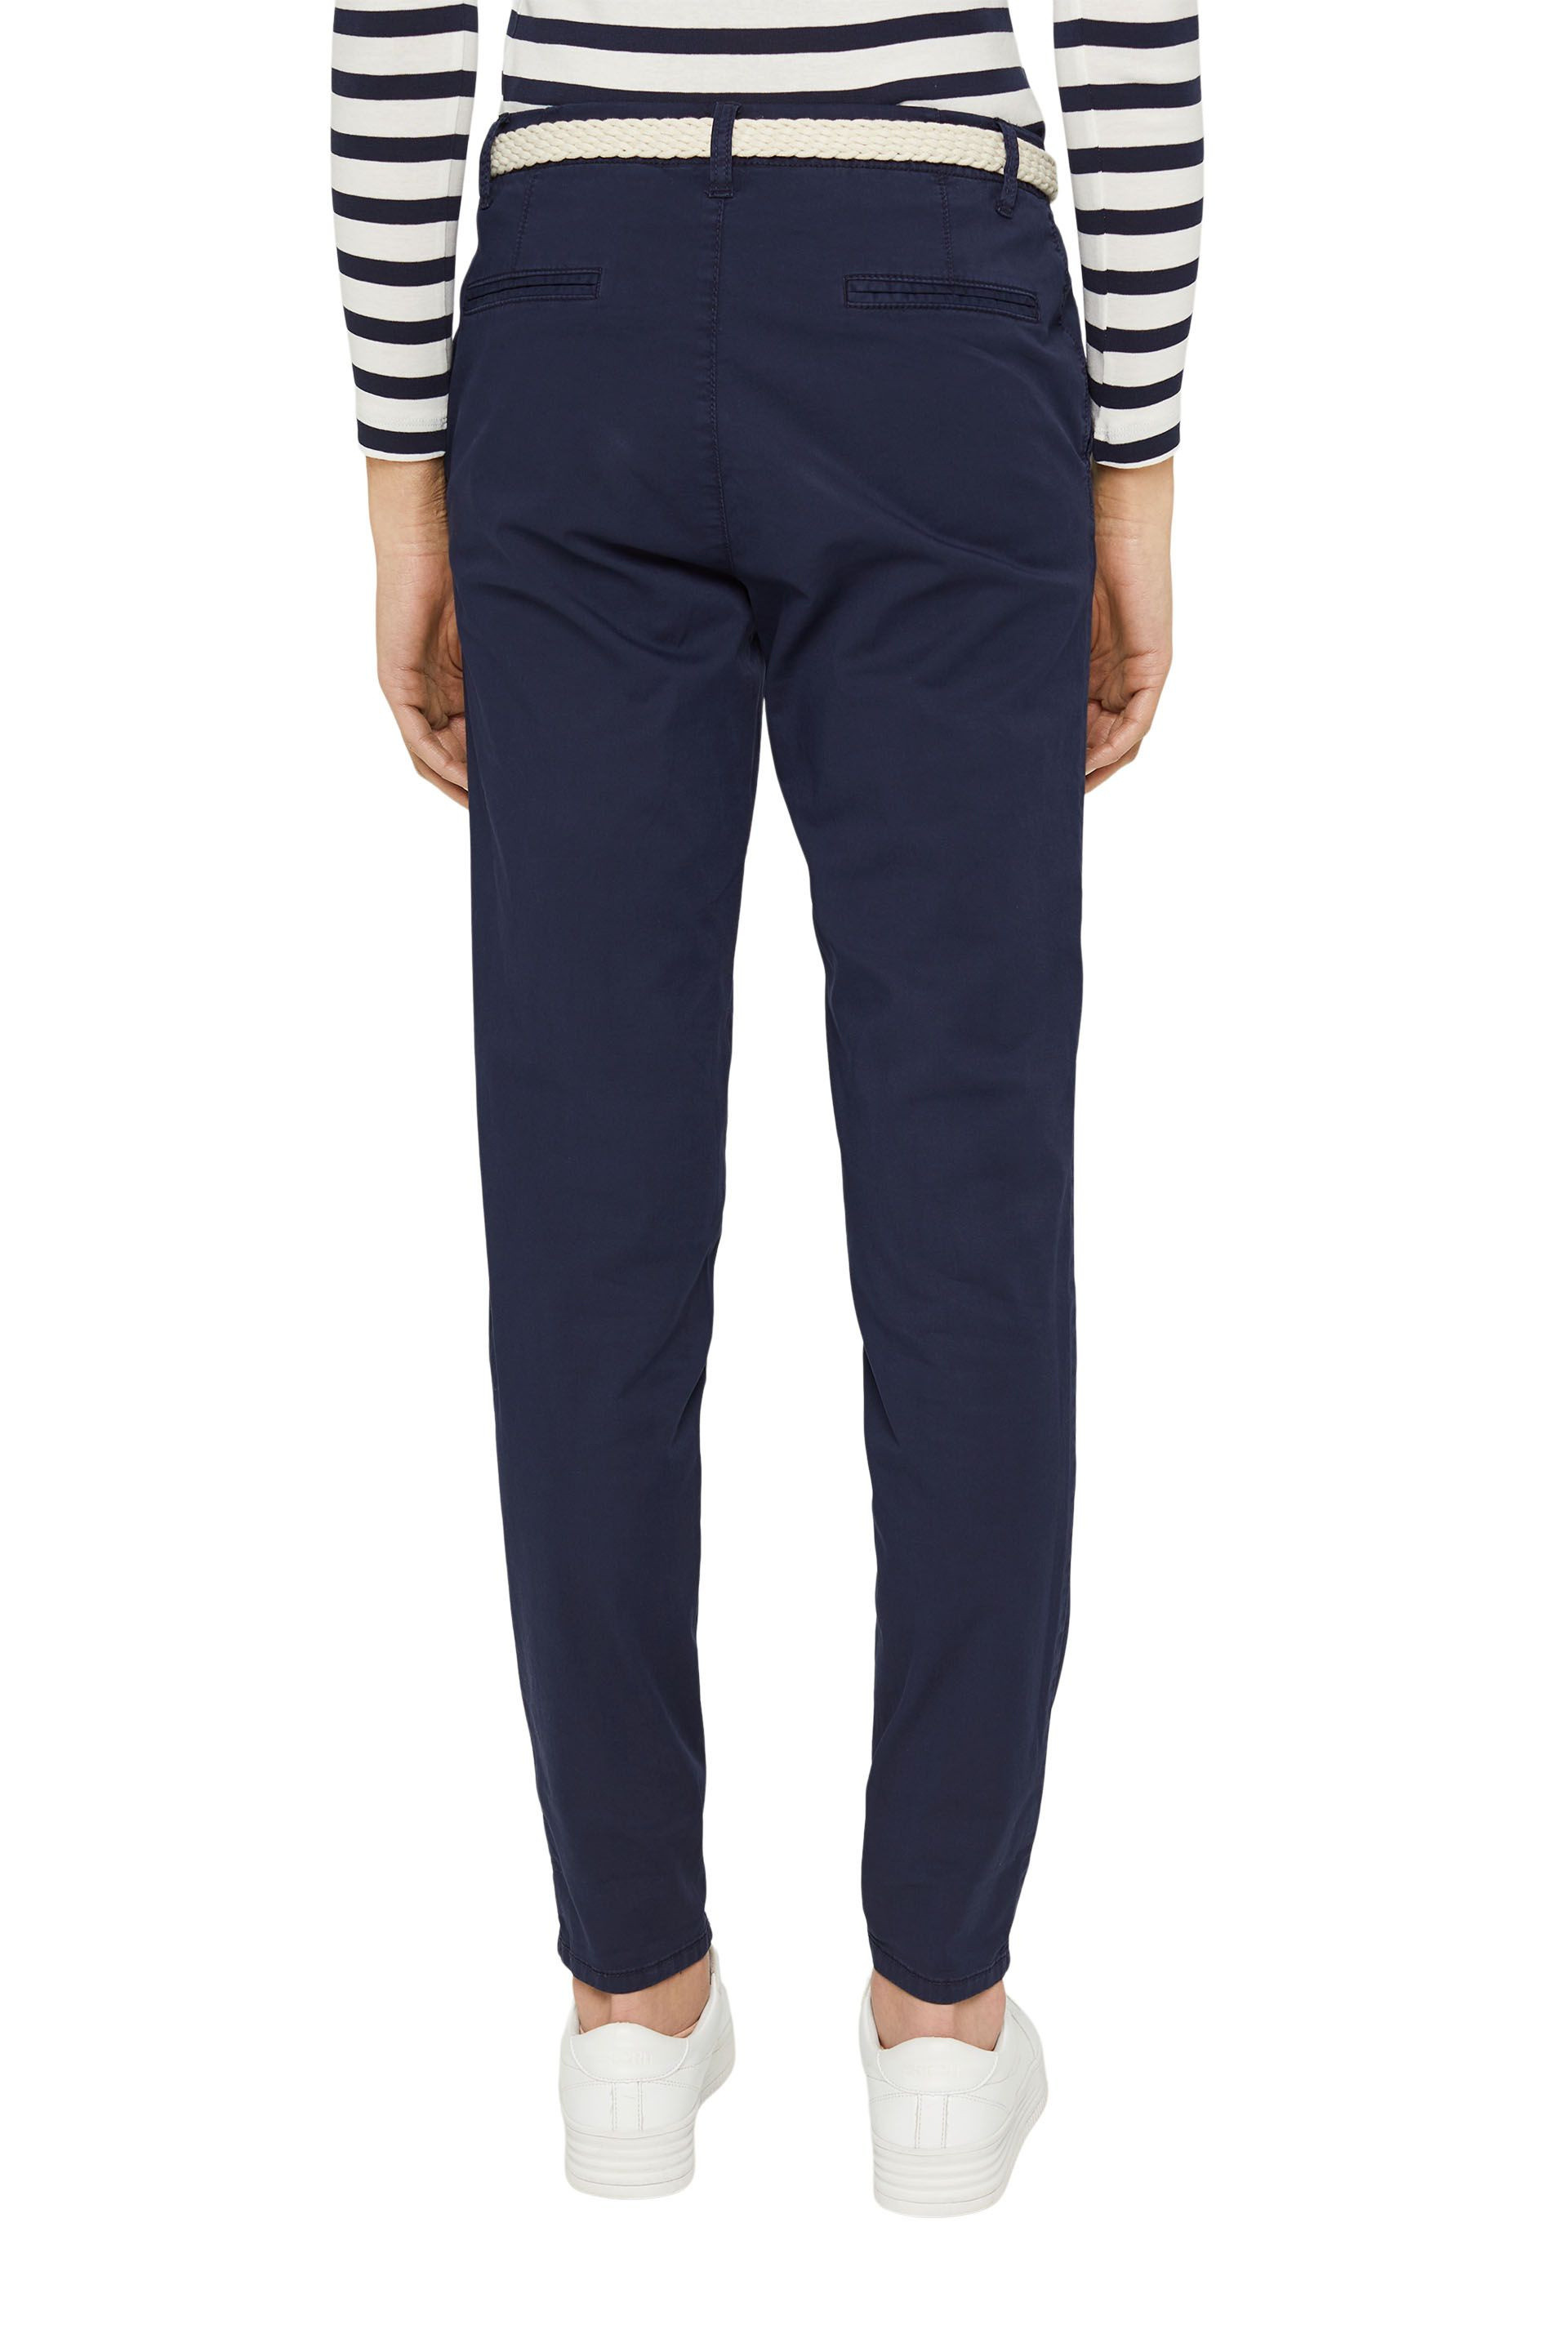 Pantaloni chino con cintura intrecciata, Blu, large image number 2